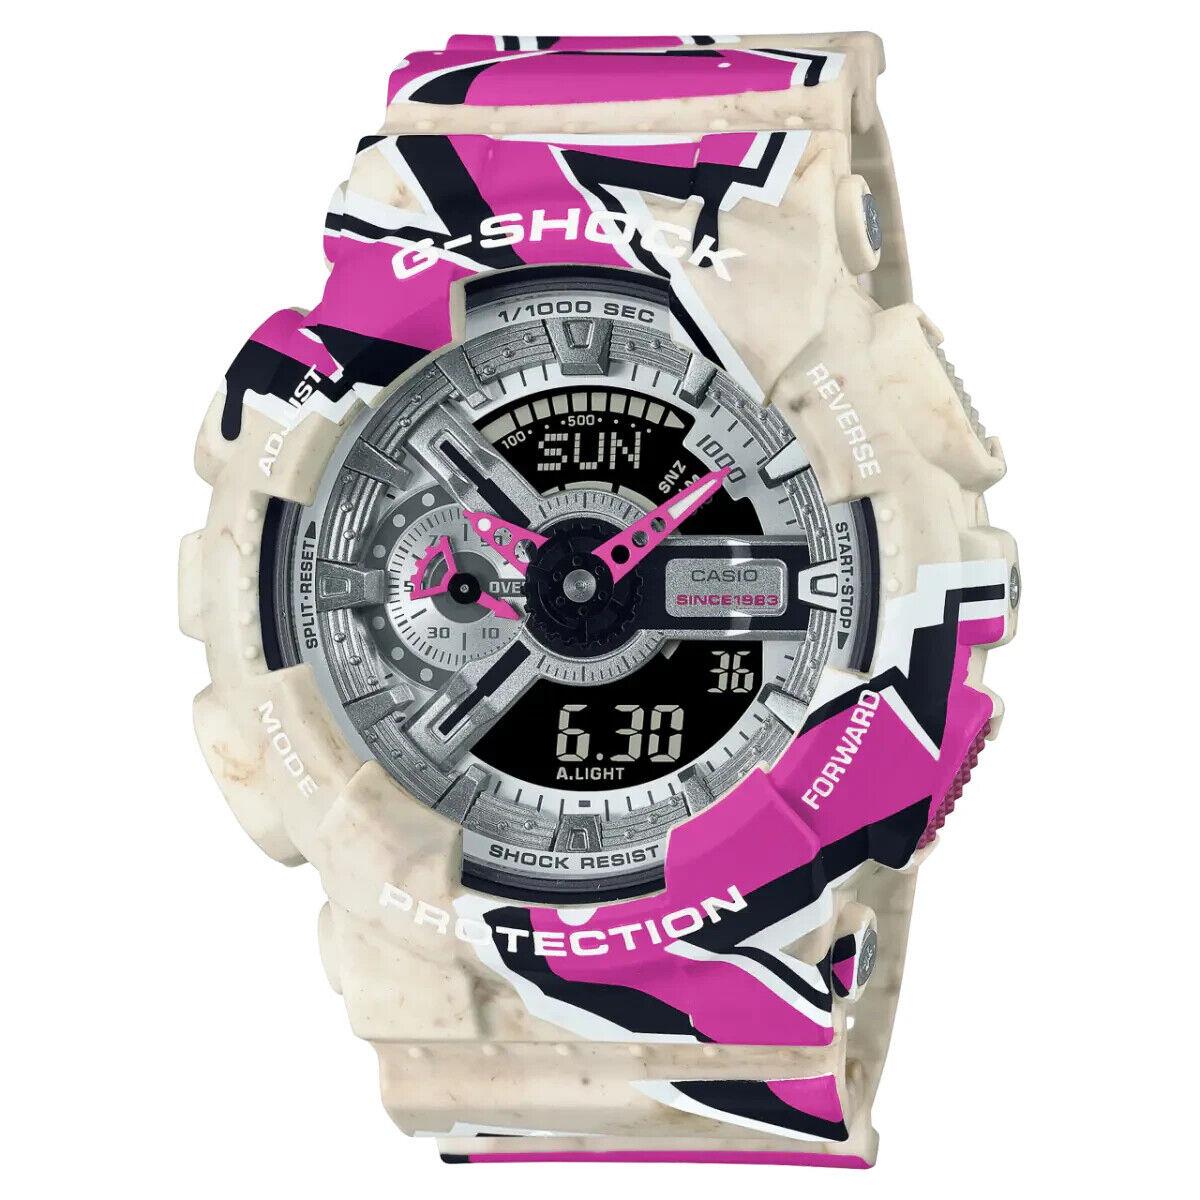 Casio G-shock GA110SS-1A Street Spirit Limited Edition Digital/analog Watch